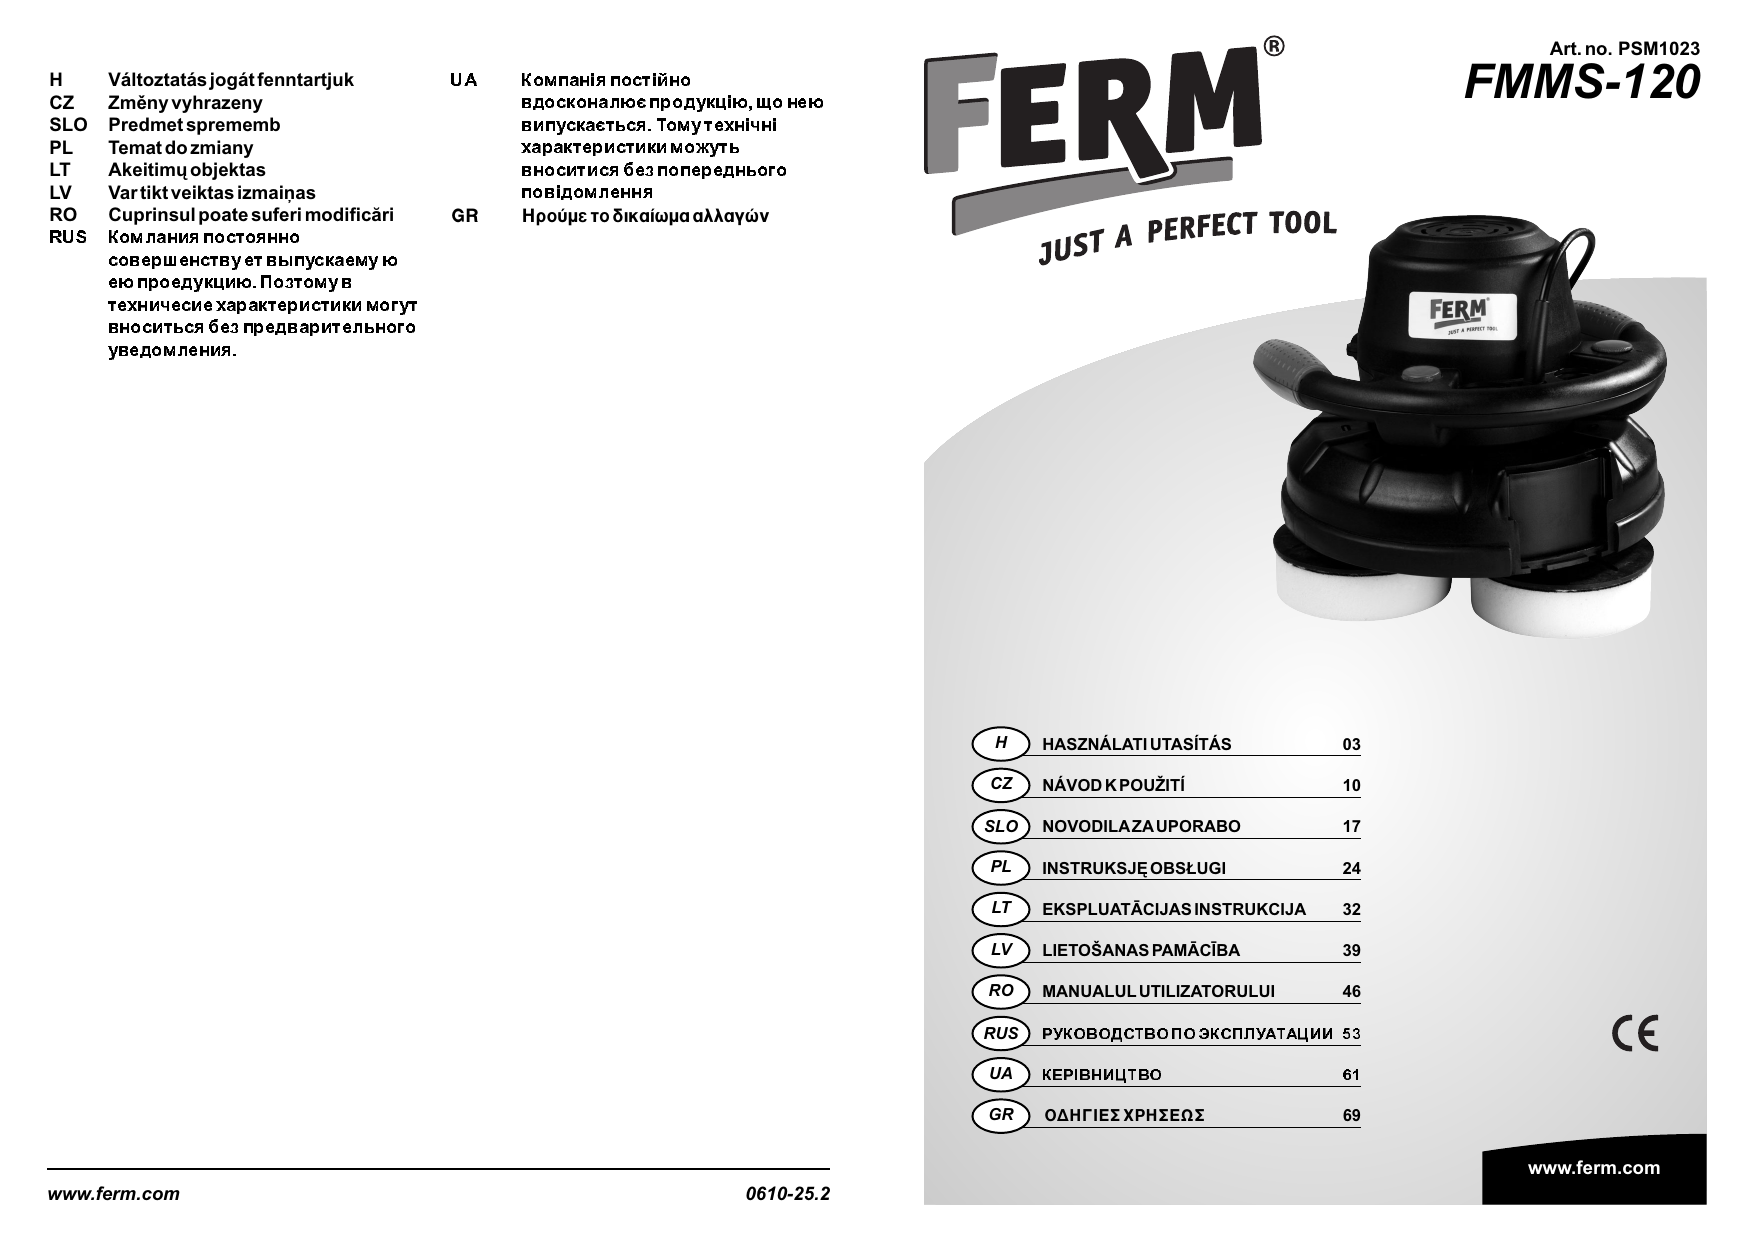 Ferm Psm1023 Uzivatelsky Manual Manualzz